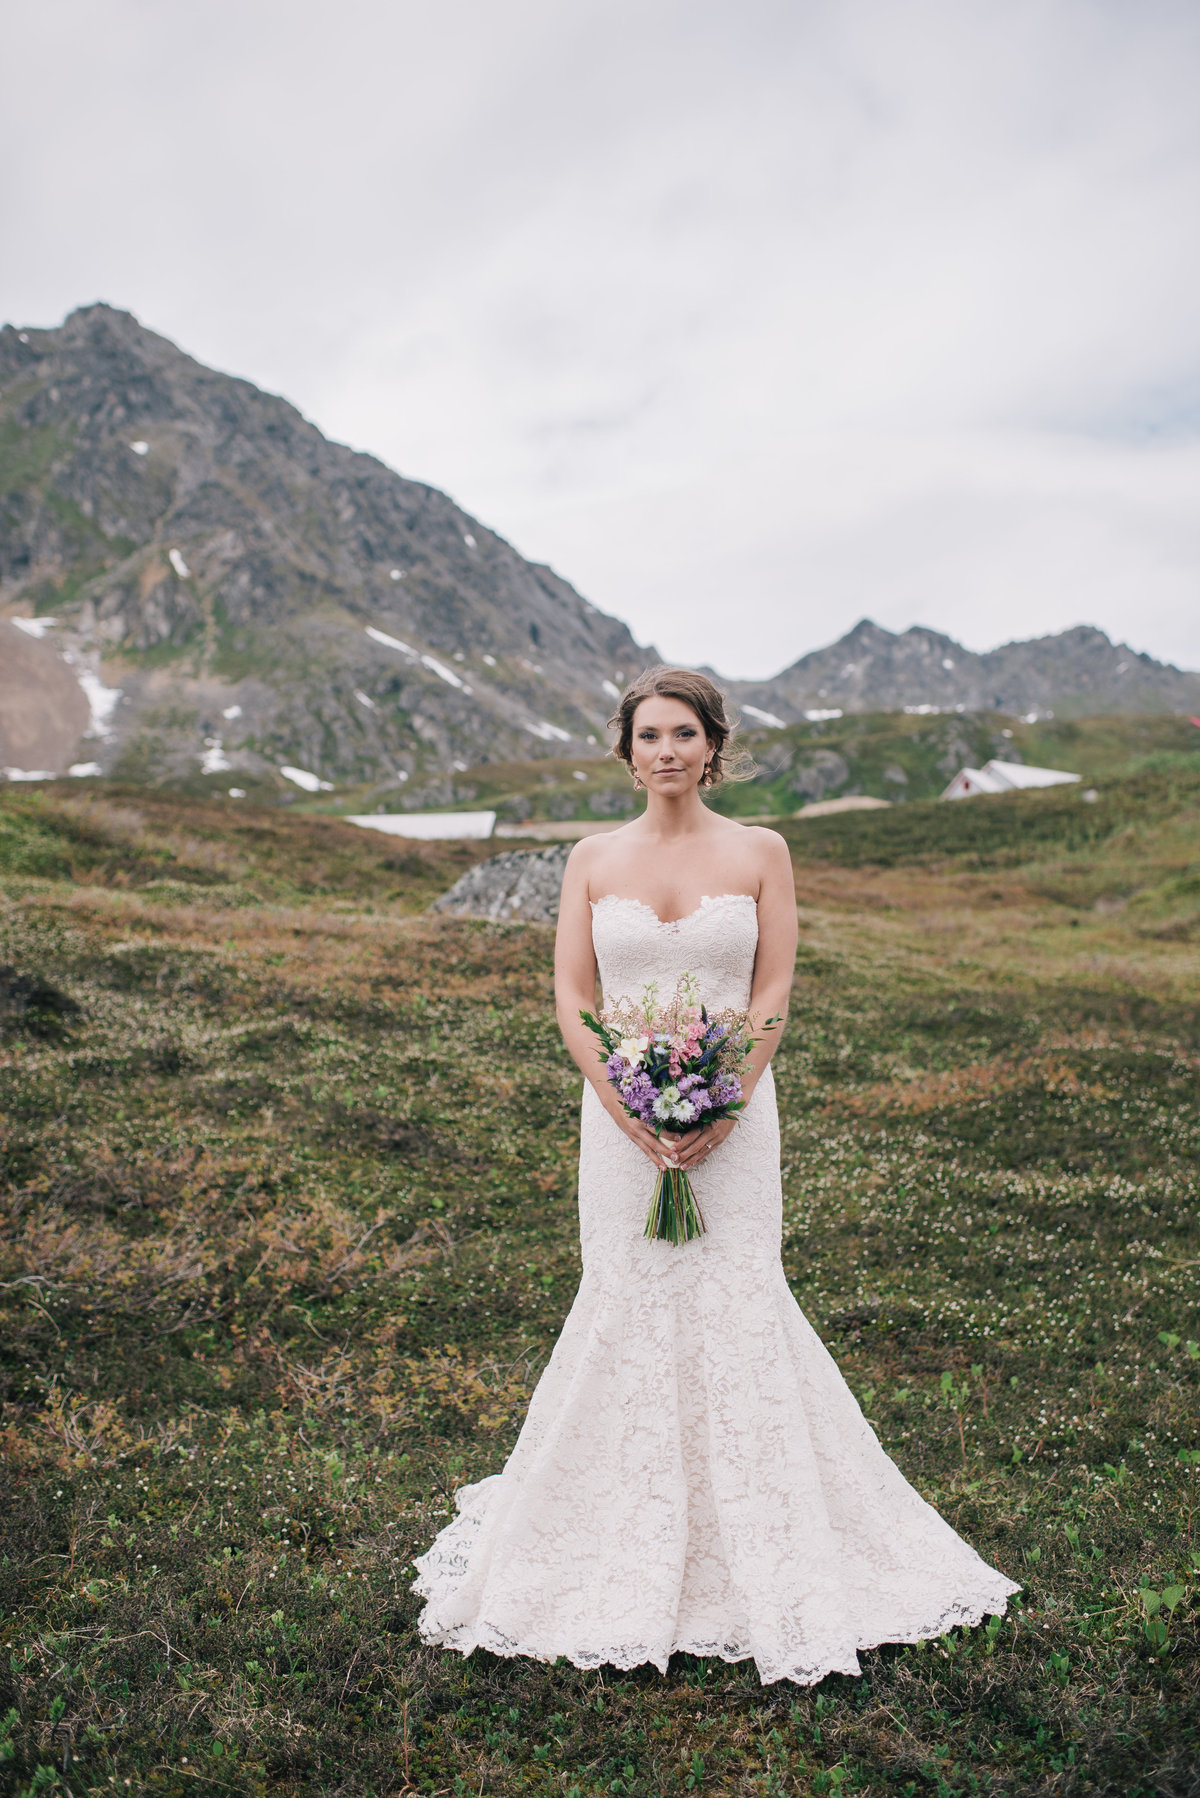 038_Erica Rose Photography_Anchorage Wedding Photographer_Jordan&Austin